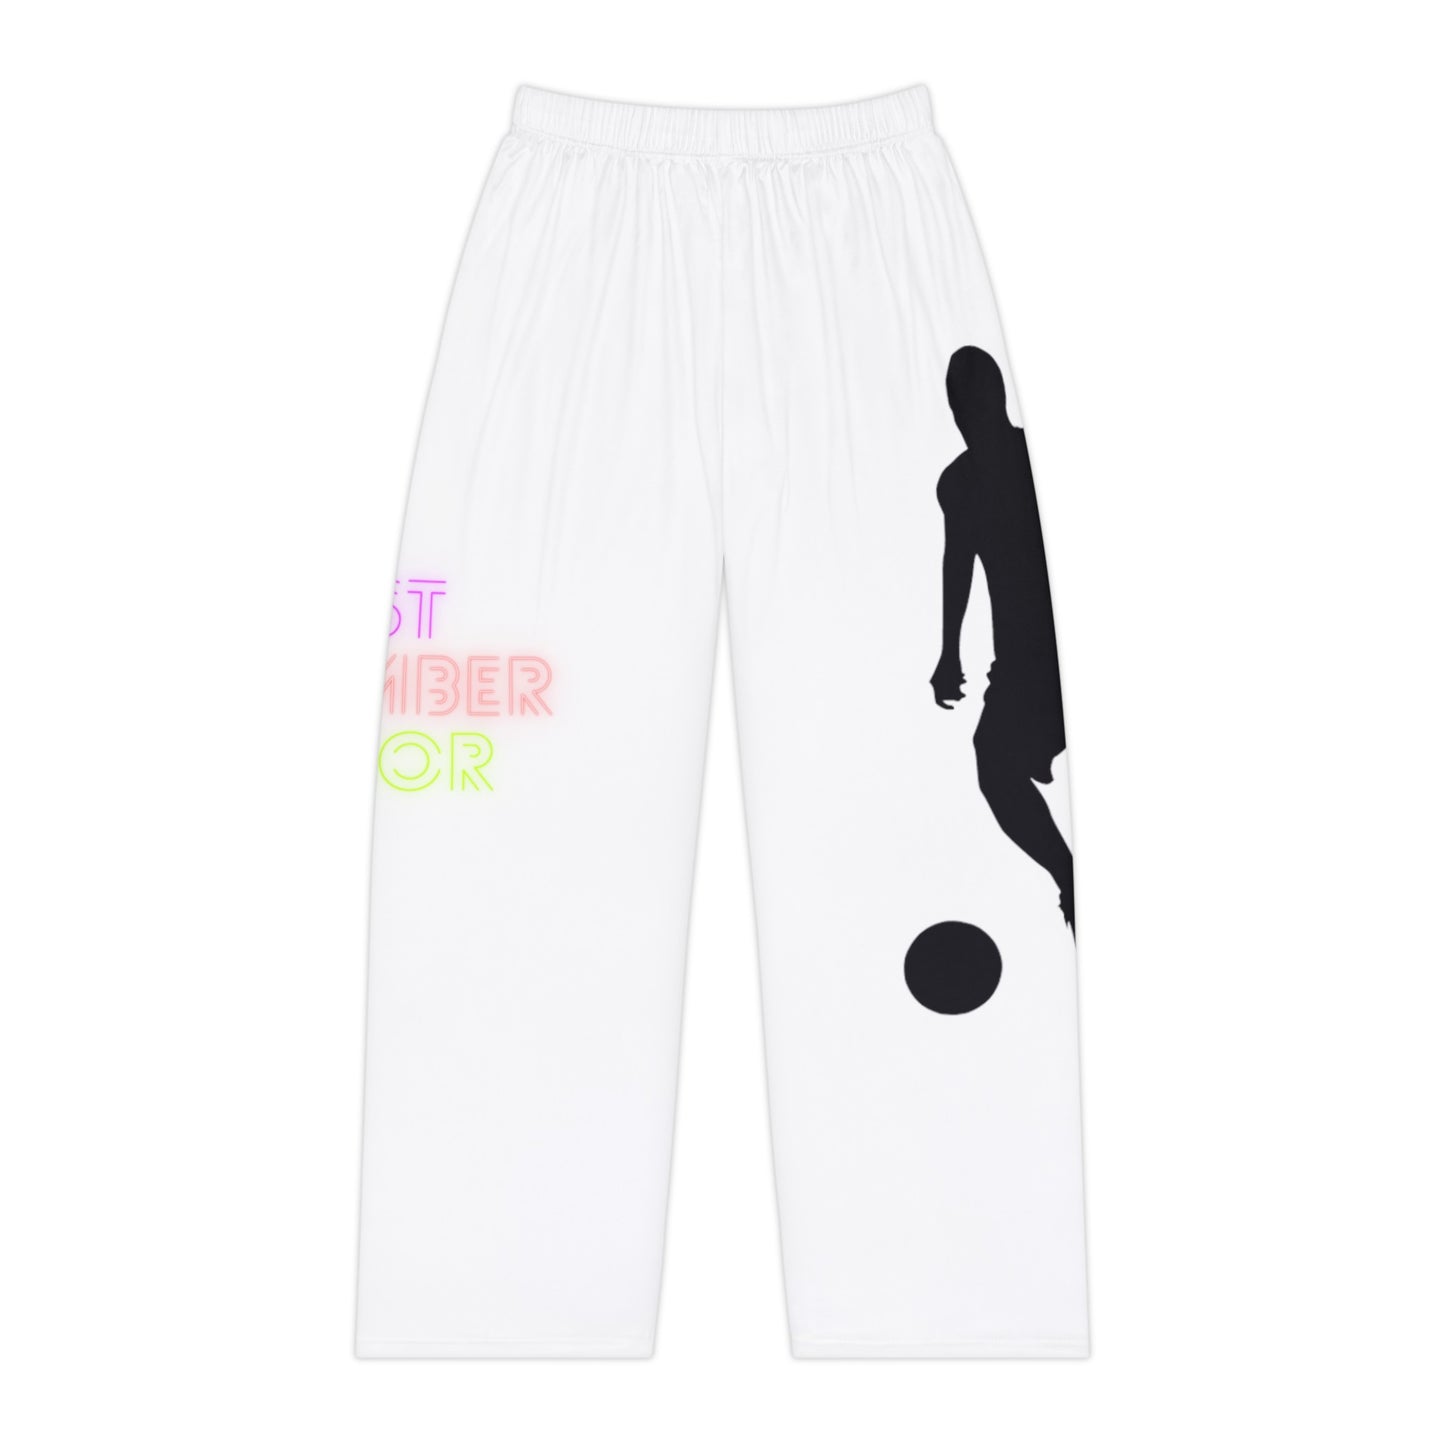 Women's Pajama Pants: Soccer White